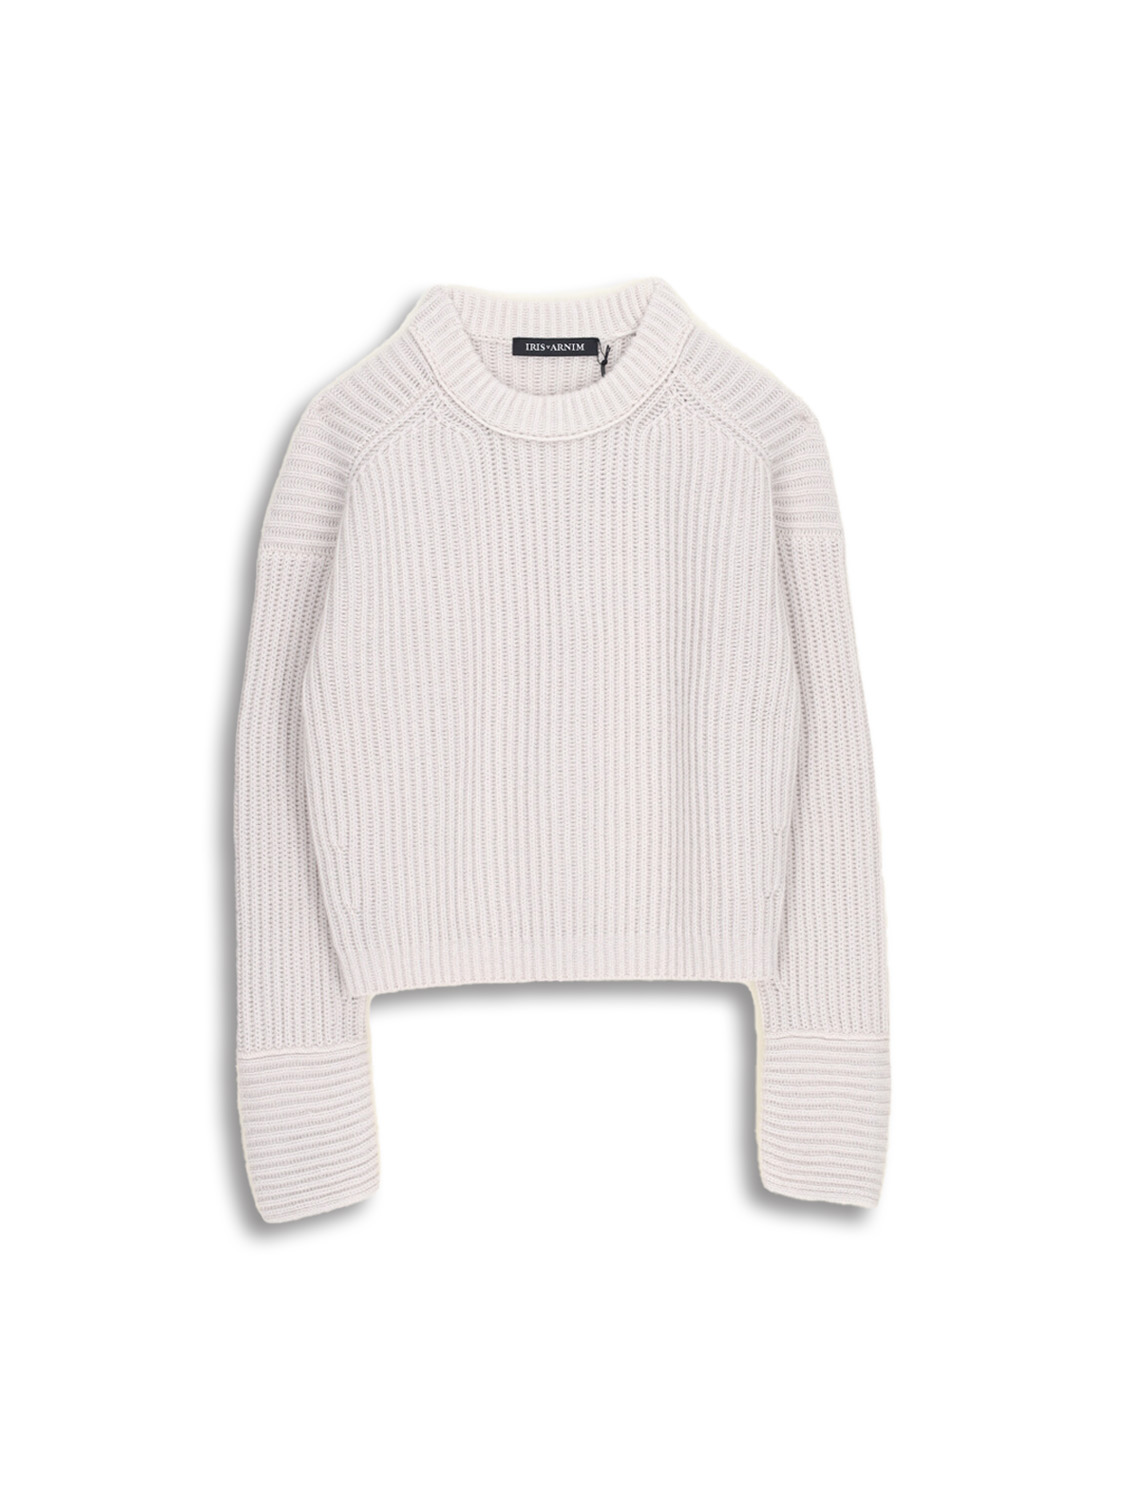 Alexandrite - coarse knit sweater in cashmere